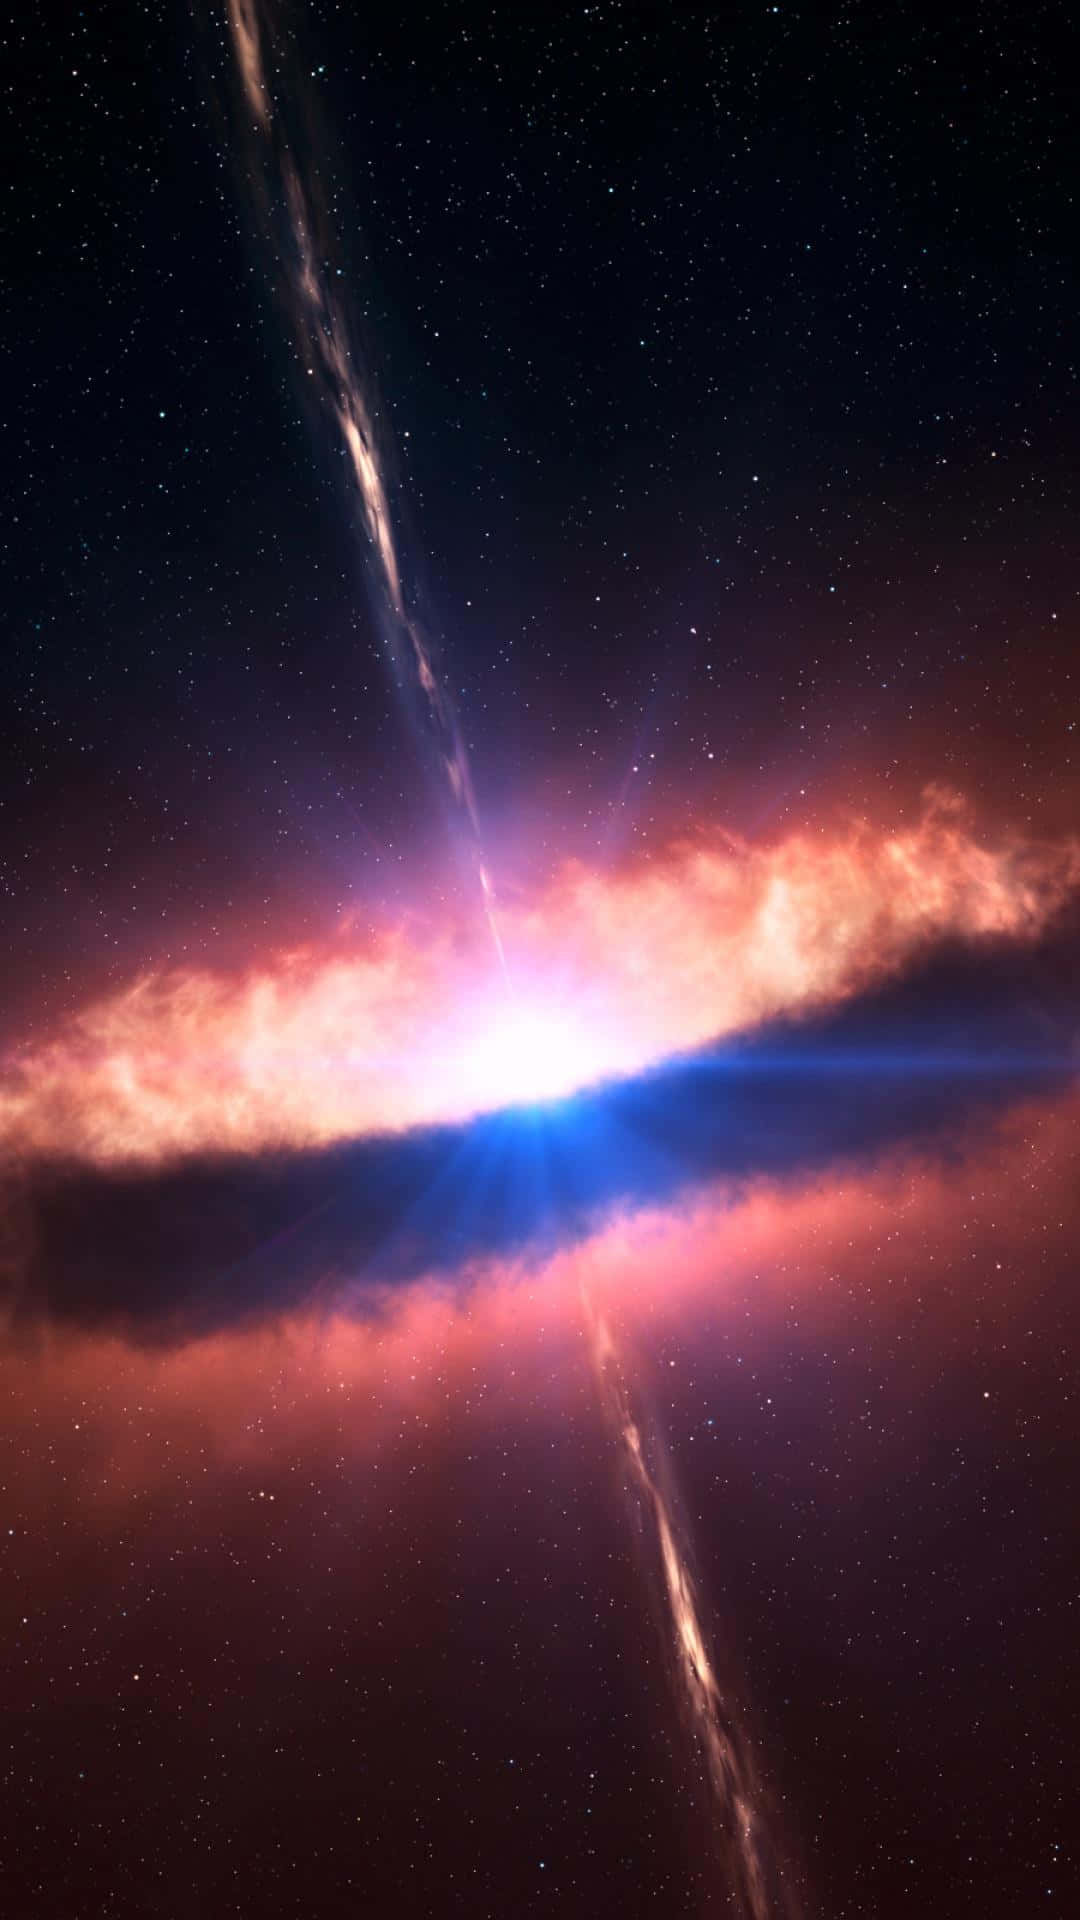 An image of a supernova that illuminates the darkness